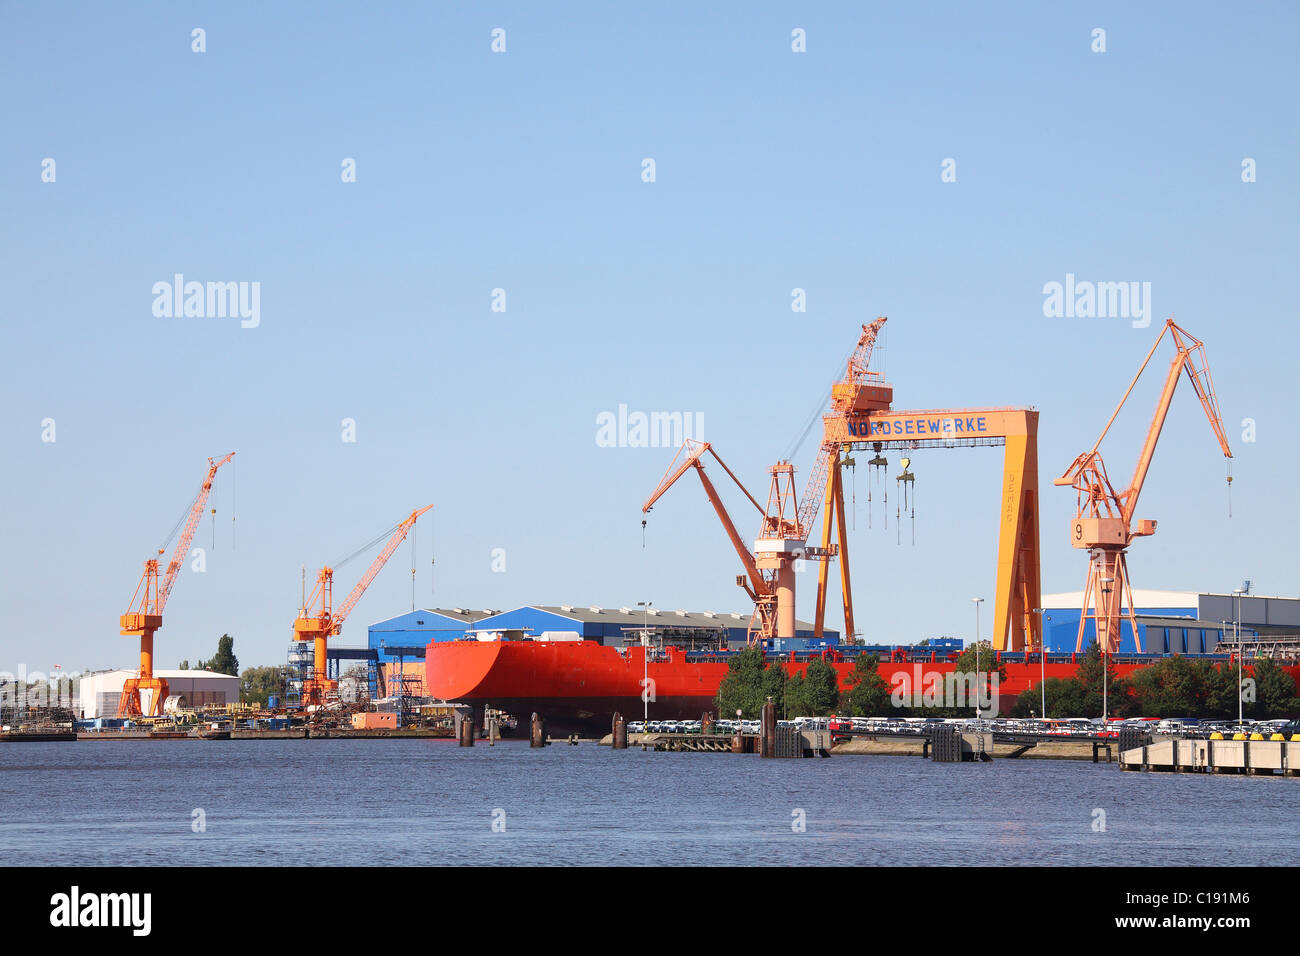 Nordseewerke, North Sea Works, dockyard, Emden Harbour, Lower Saxony, Germany, Europe Stock Photo